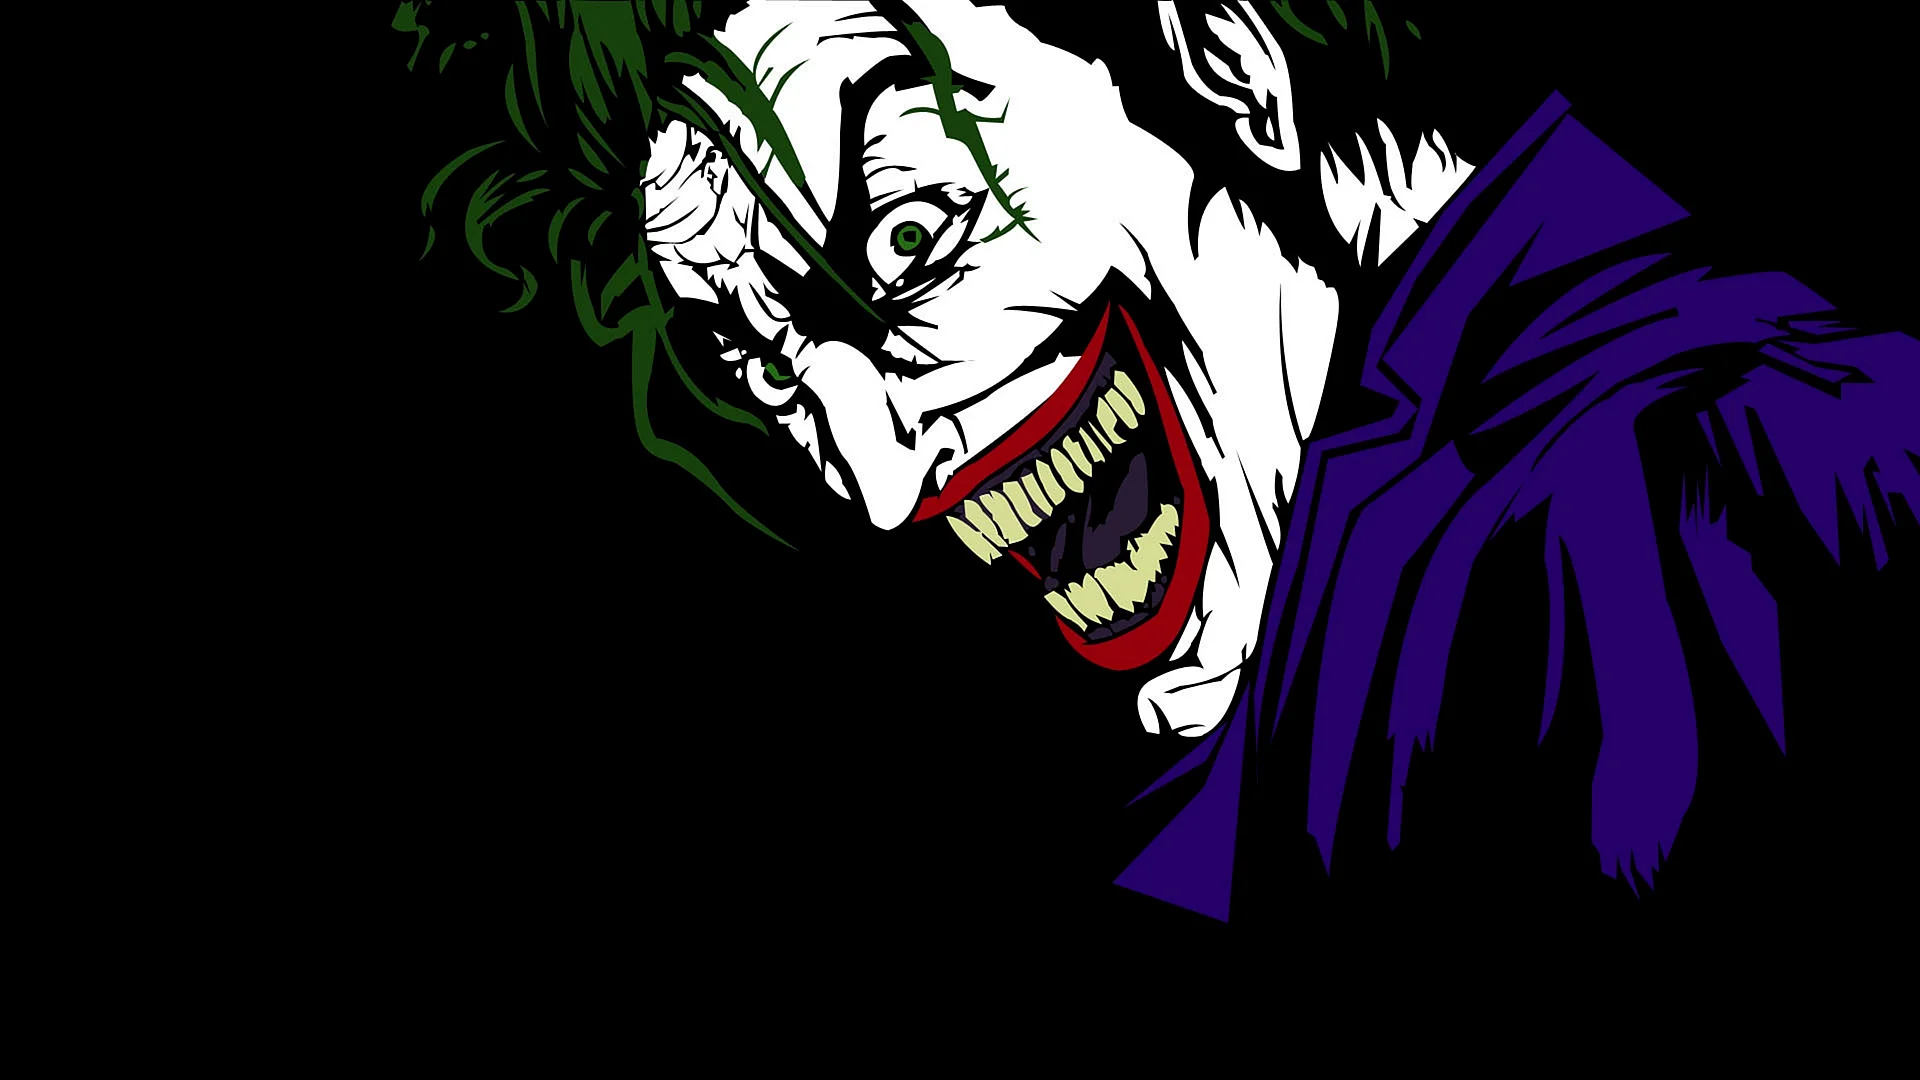 Joker Cartoon Wallpaper